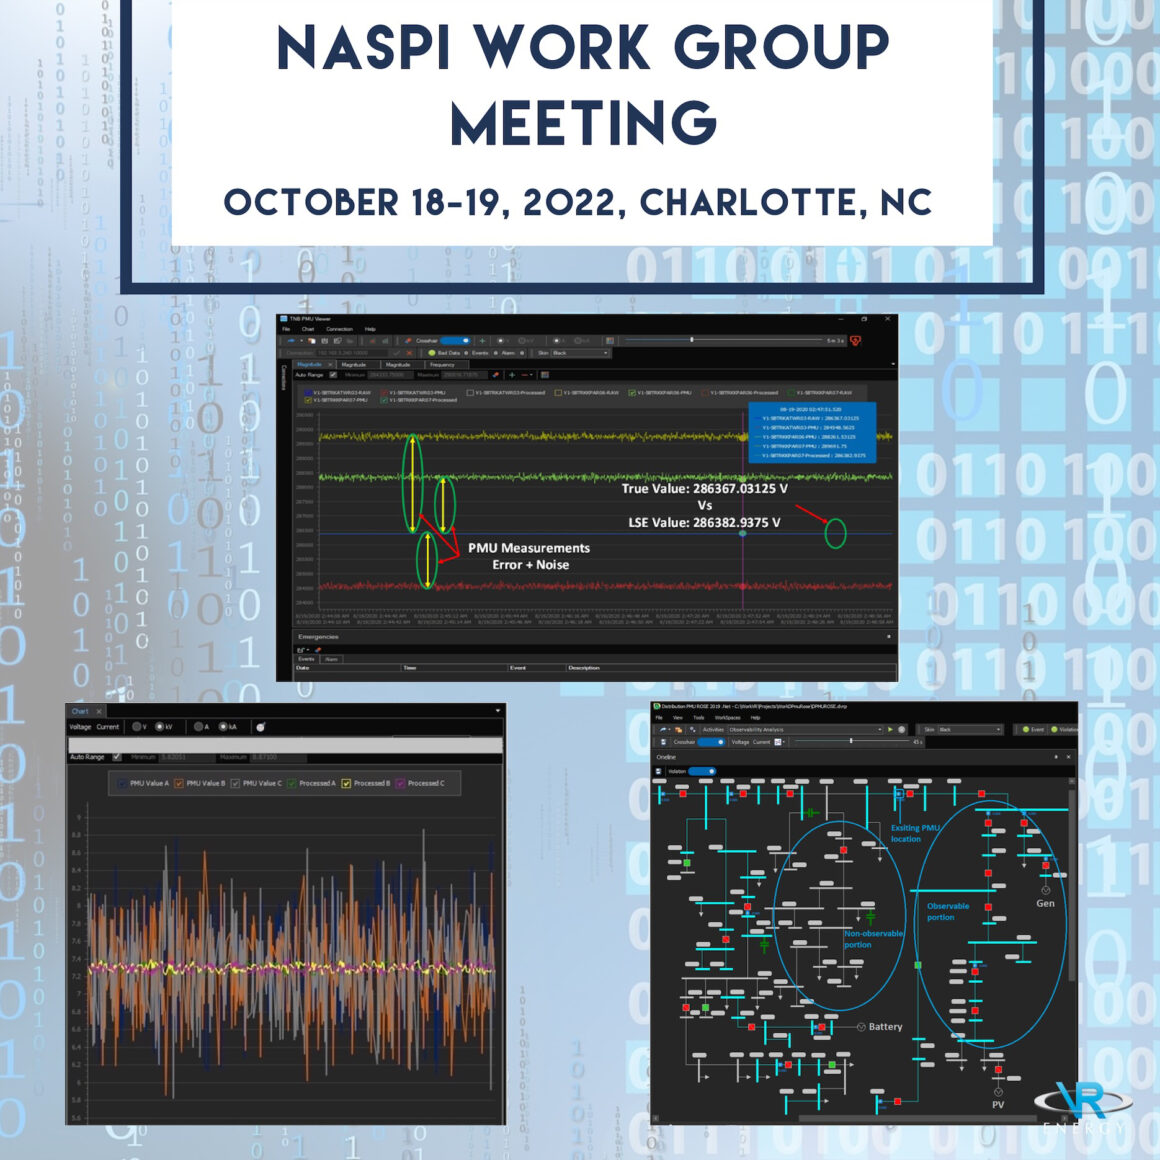 NASPI Work Group Meeting (October 18-19, 2022)